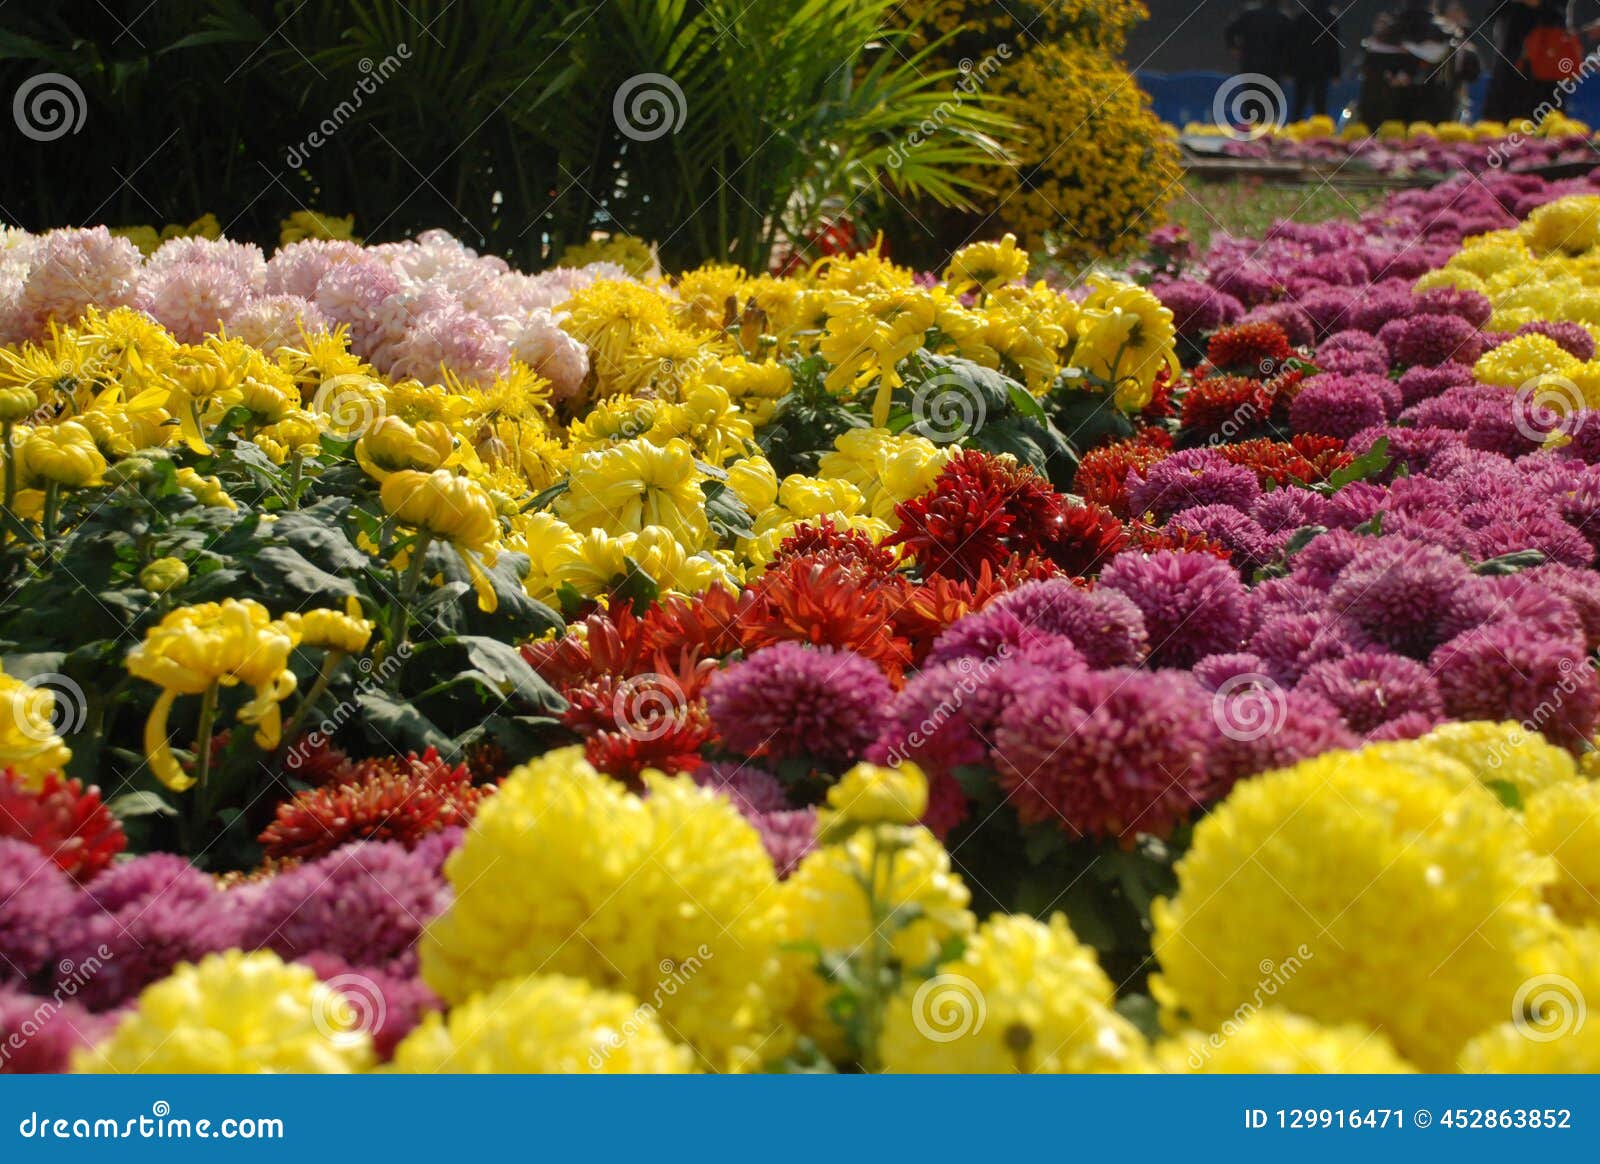 Chrysanthemum garden